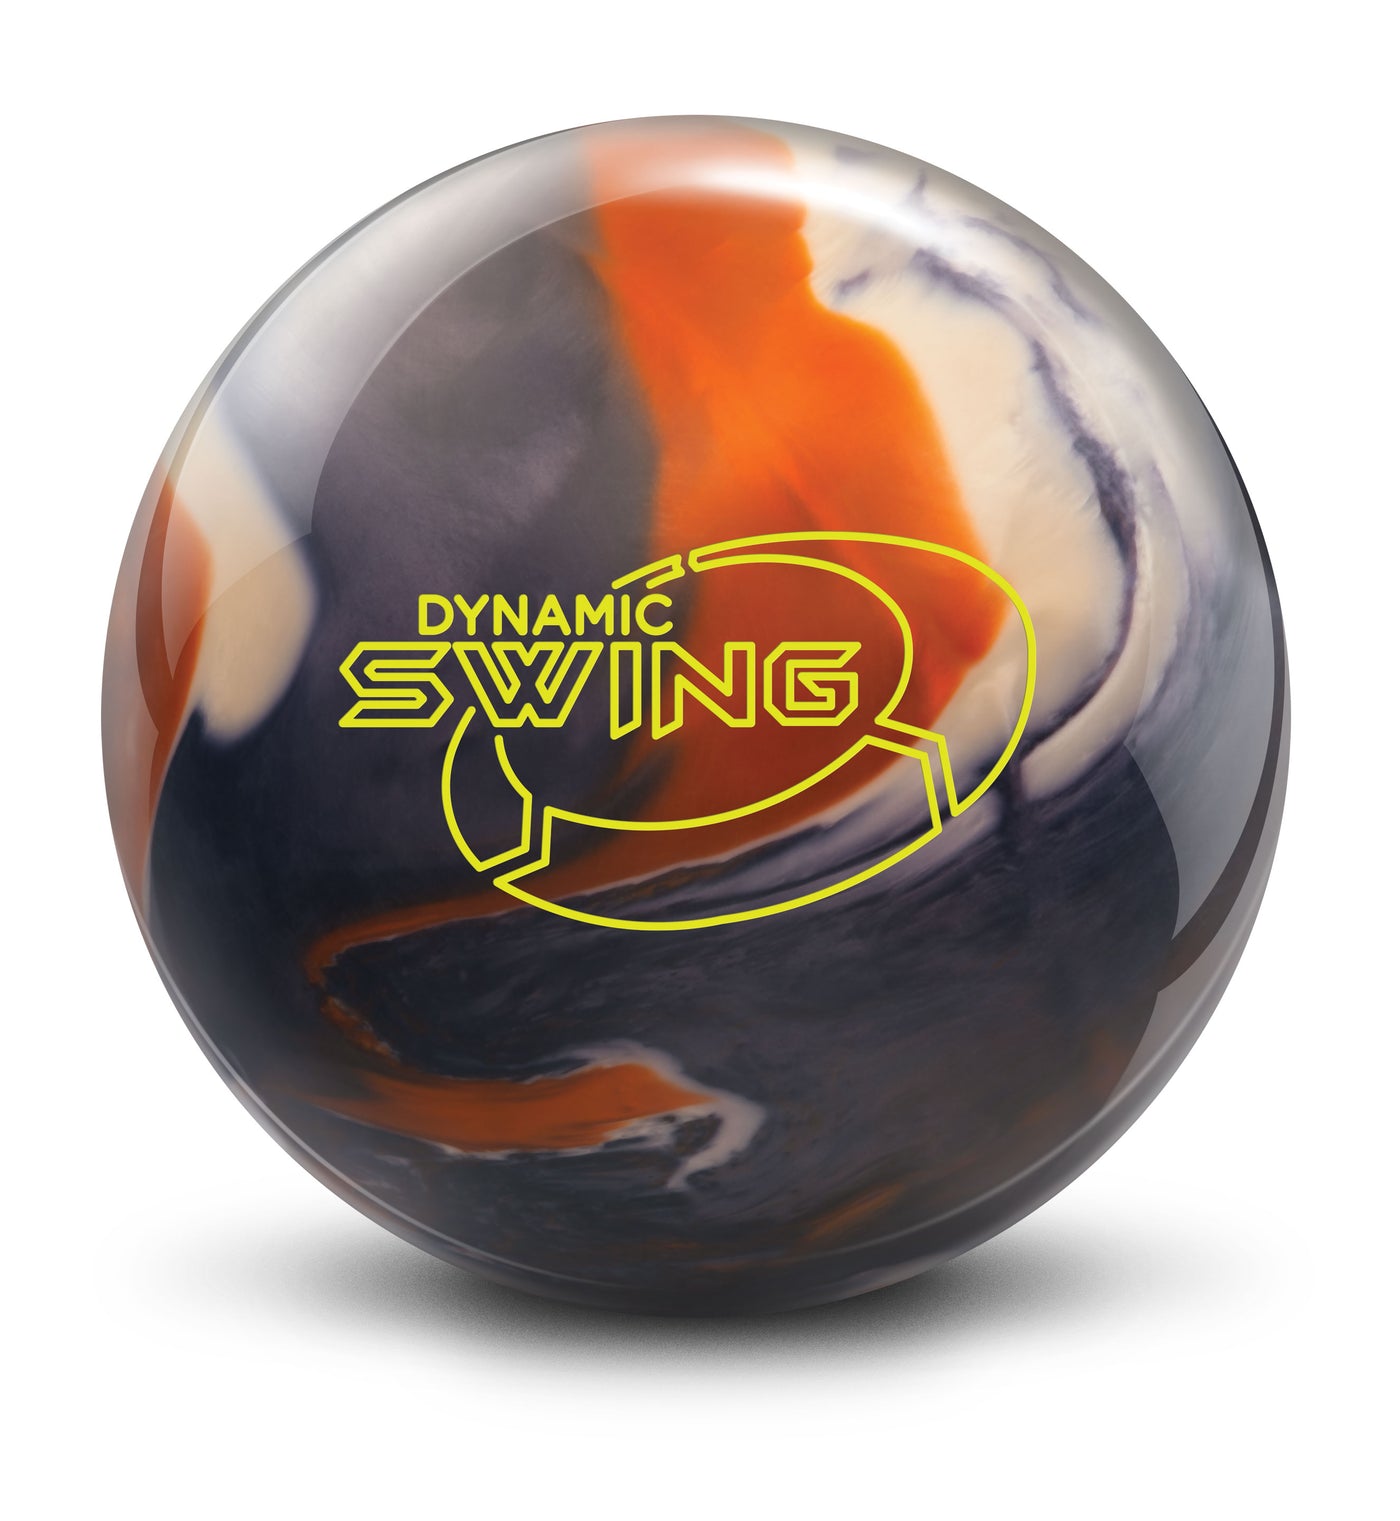 Dynamic Swing Pearl Bowling Ball